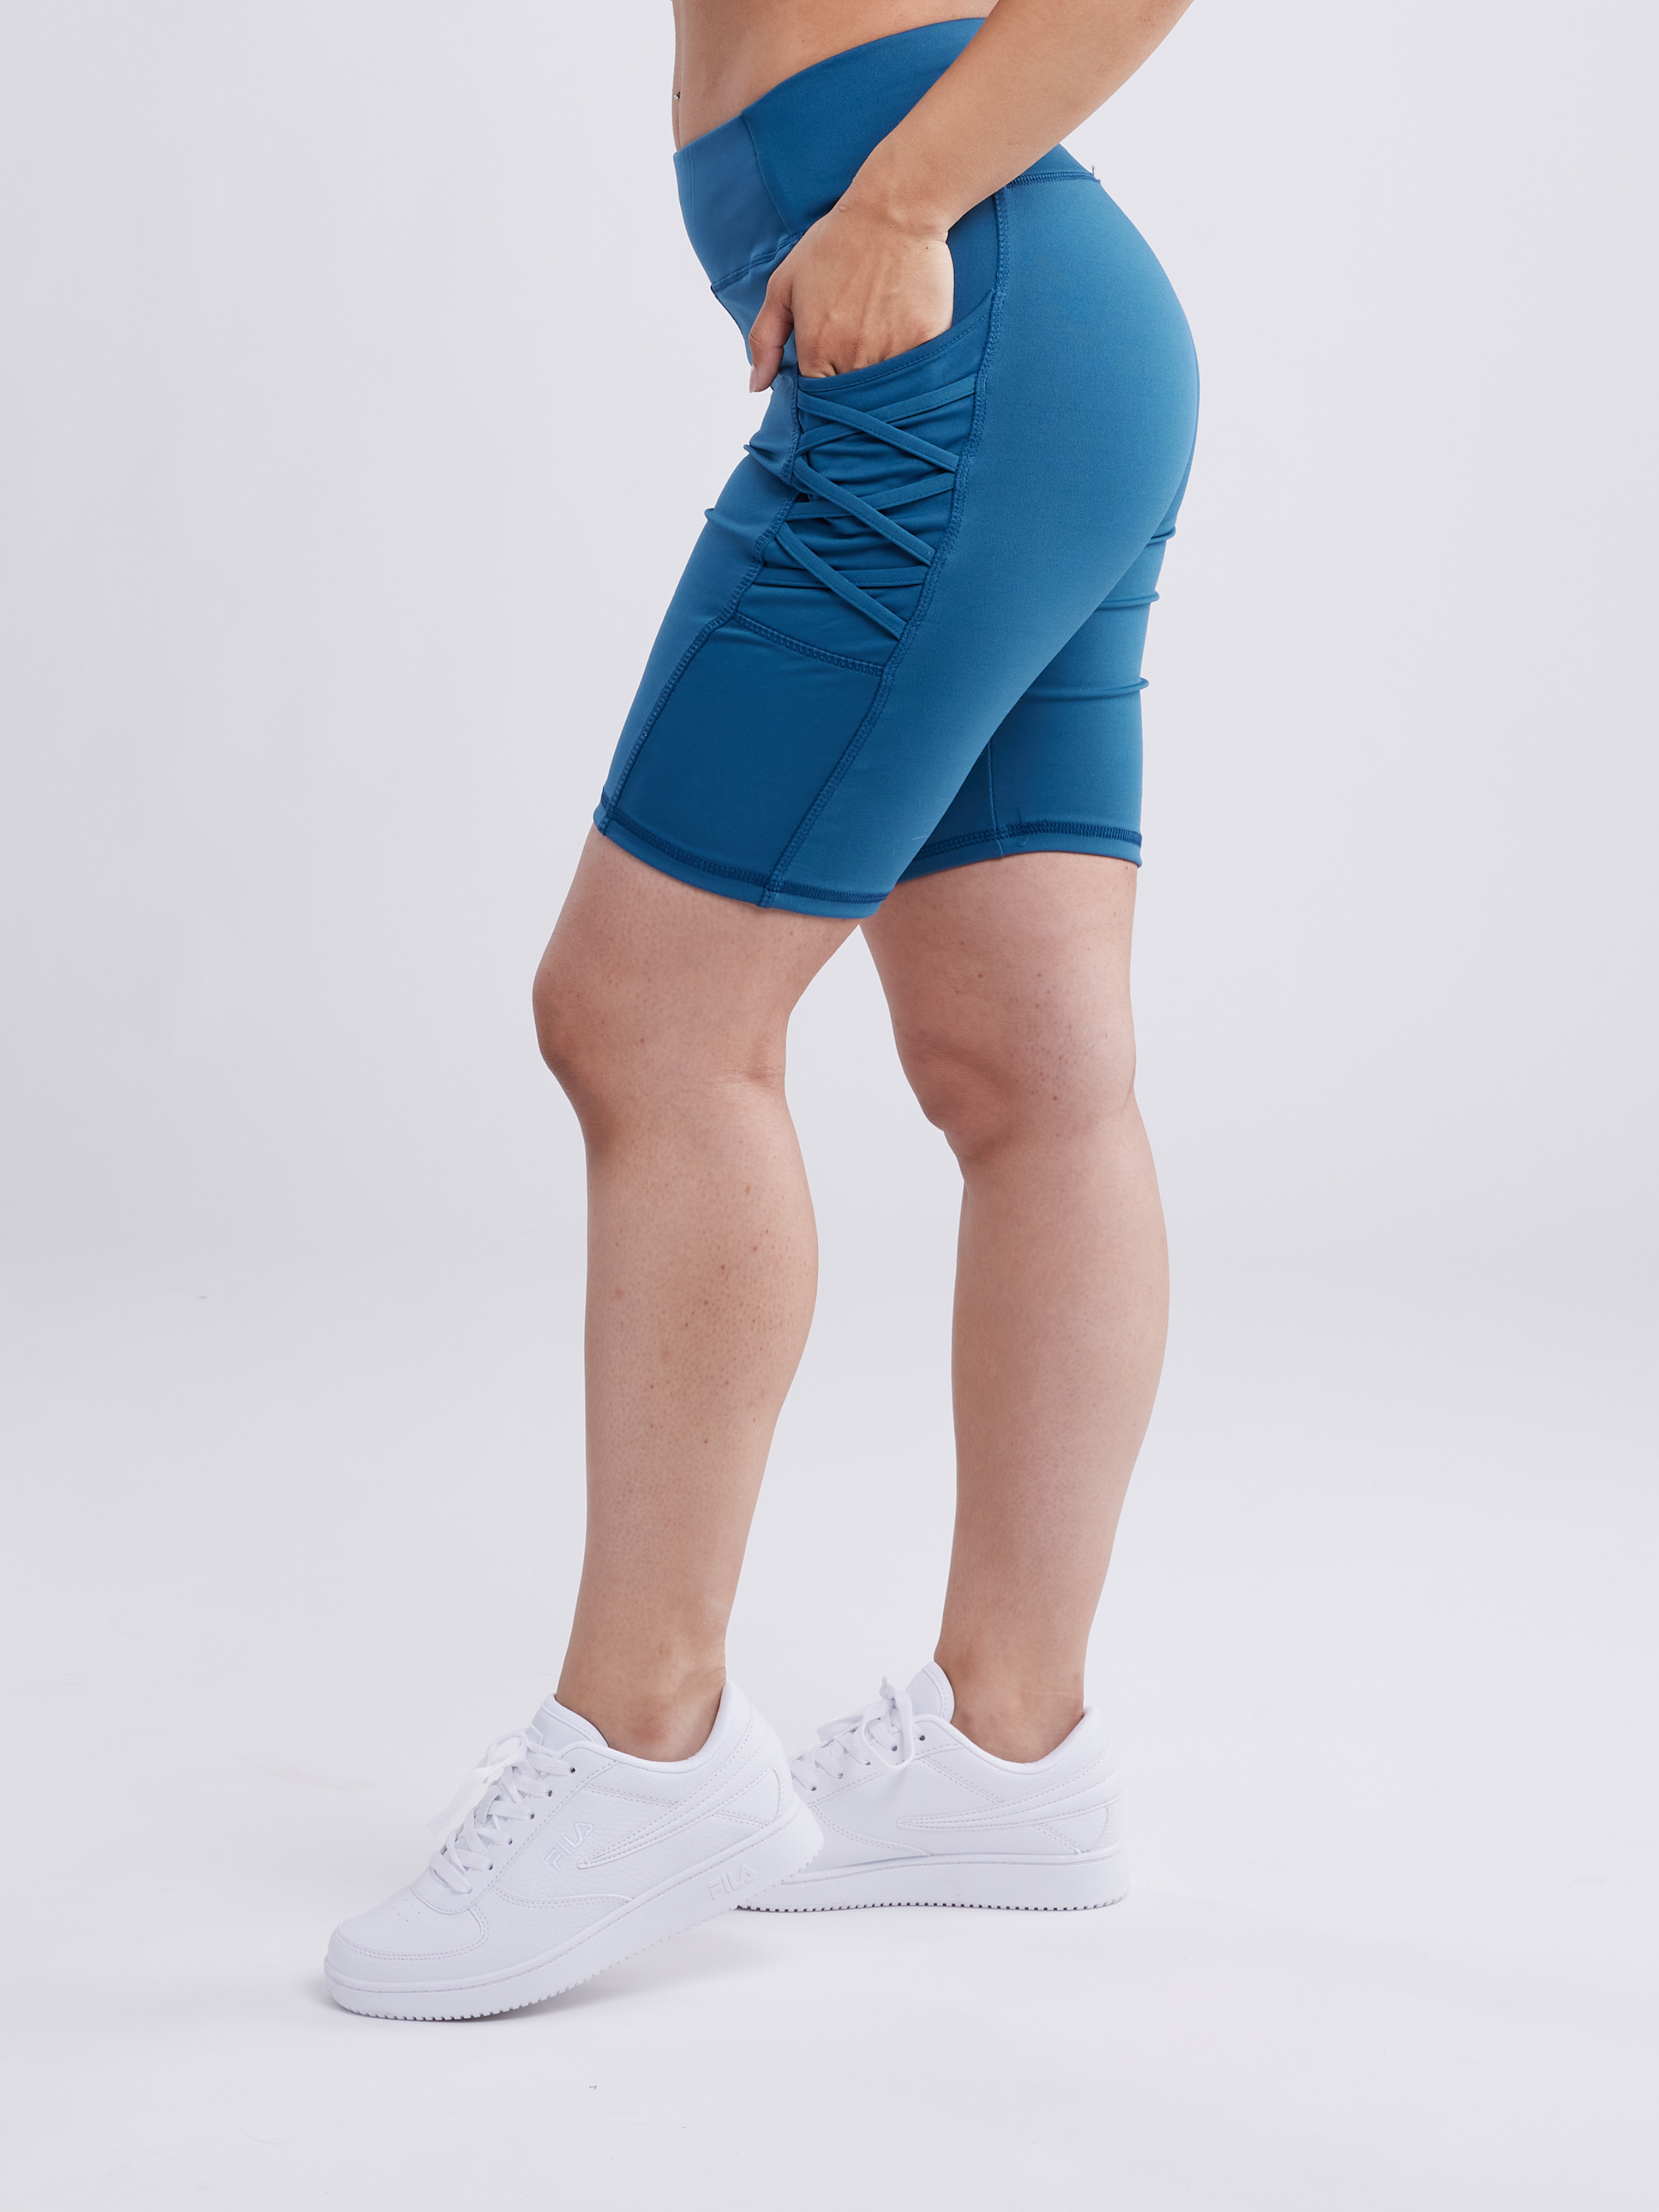 JUPITER GEAR High-Waisted Mid-Thigh Workout Shorts with Pockets & Criss Cross Design